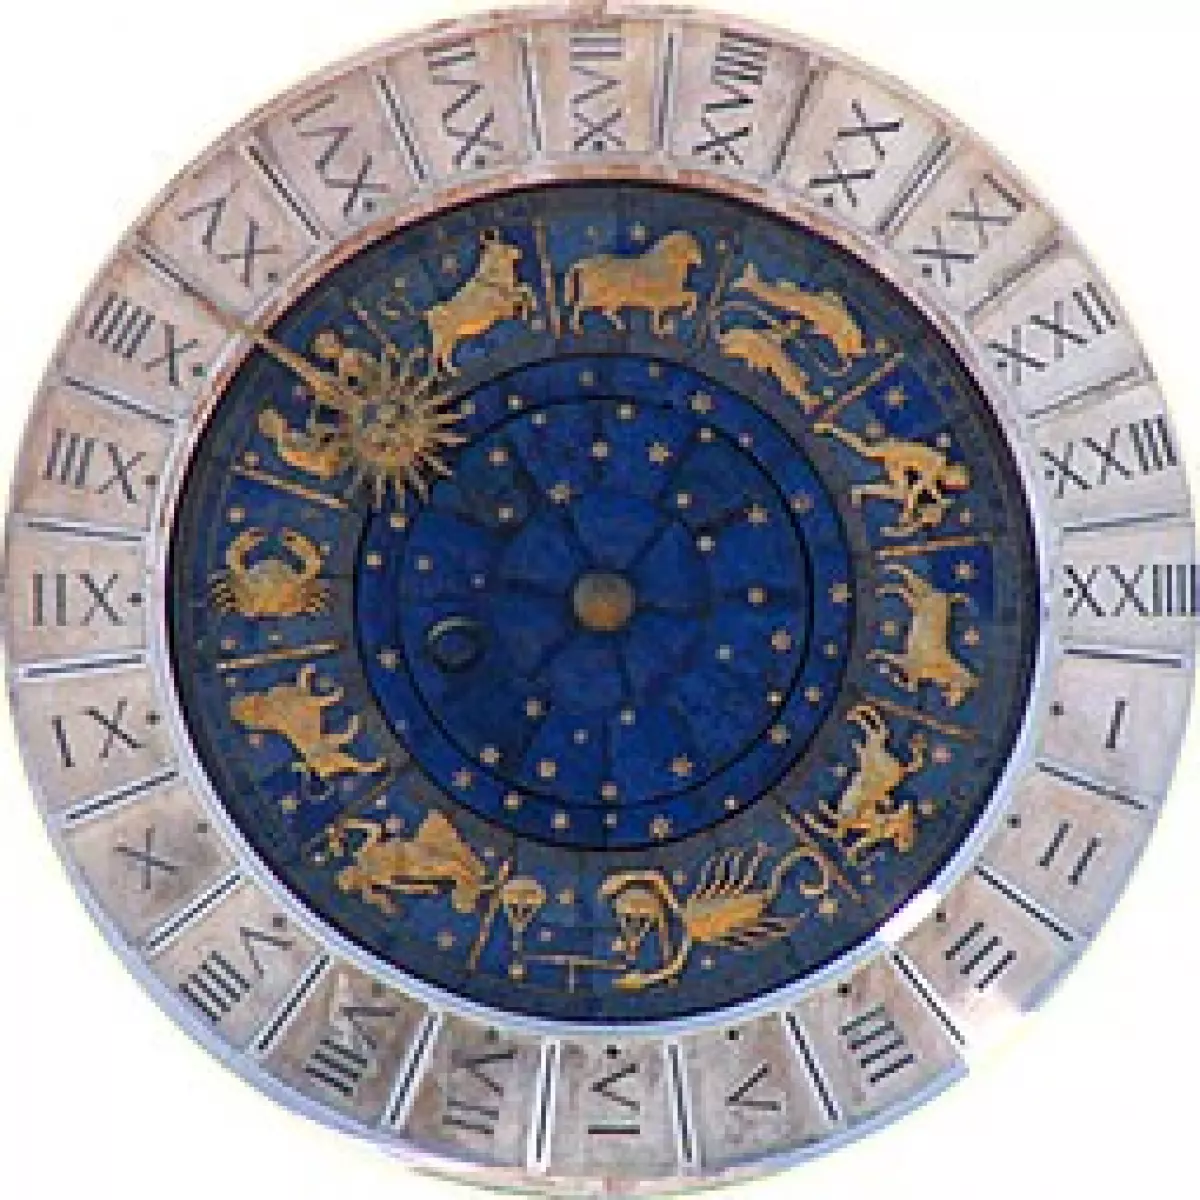 Sun sign astrology